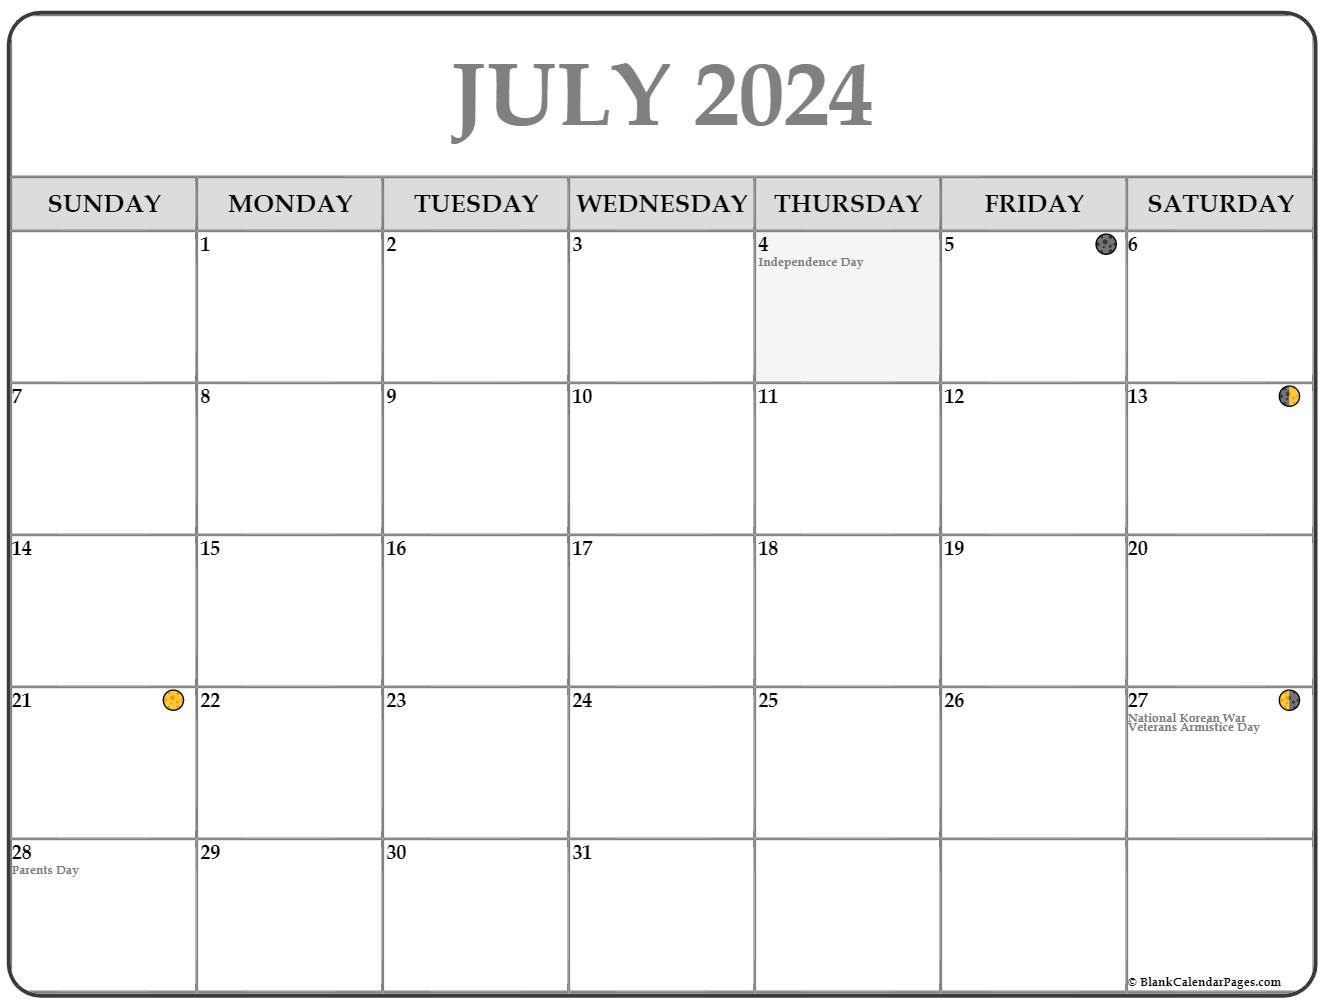 July 2024 Lunar Calendar | Moon Phase Calendar | July Moon Phases Calendar 2024